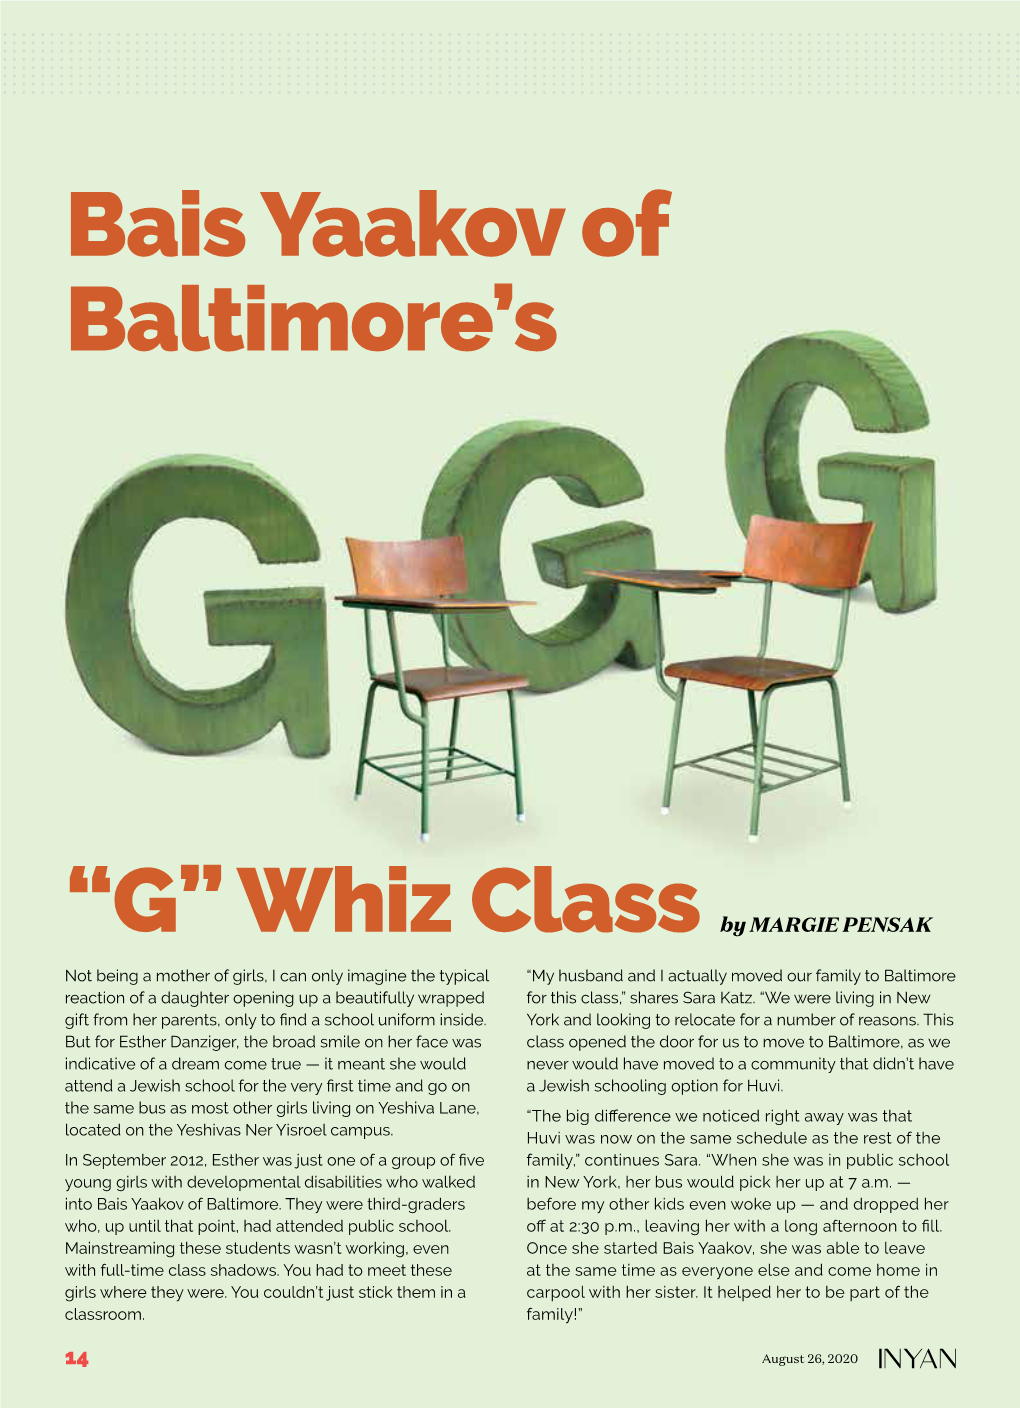 Whiz Class by MARGIE PENSAK Bais Yaakov of Baltimore's